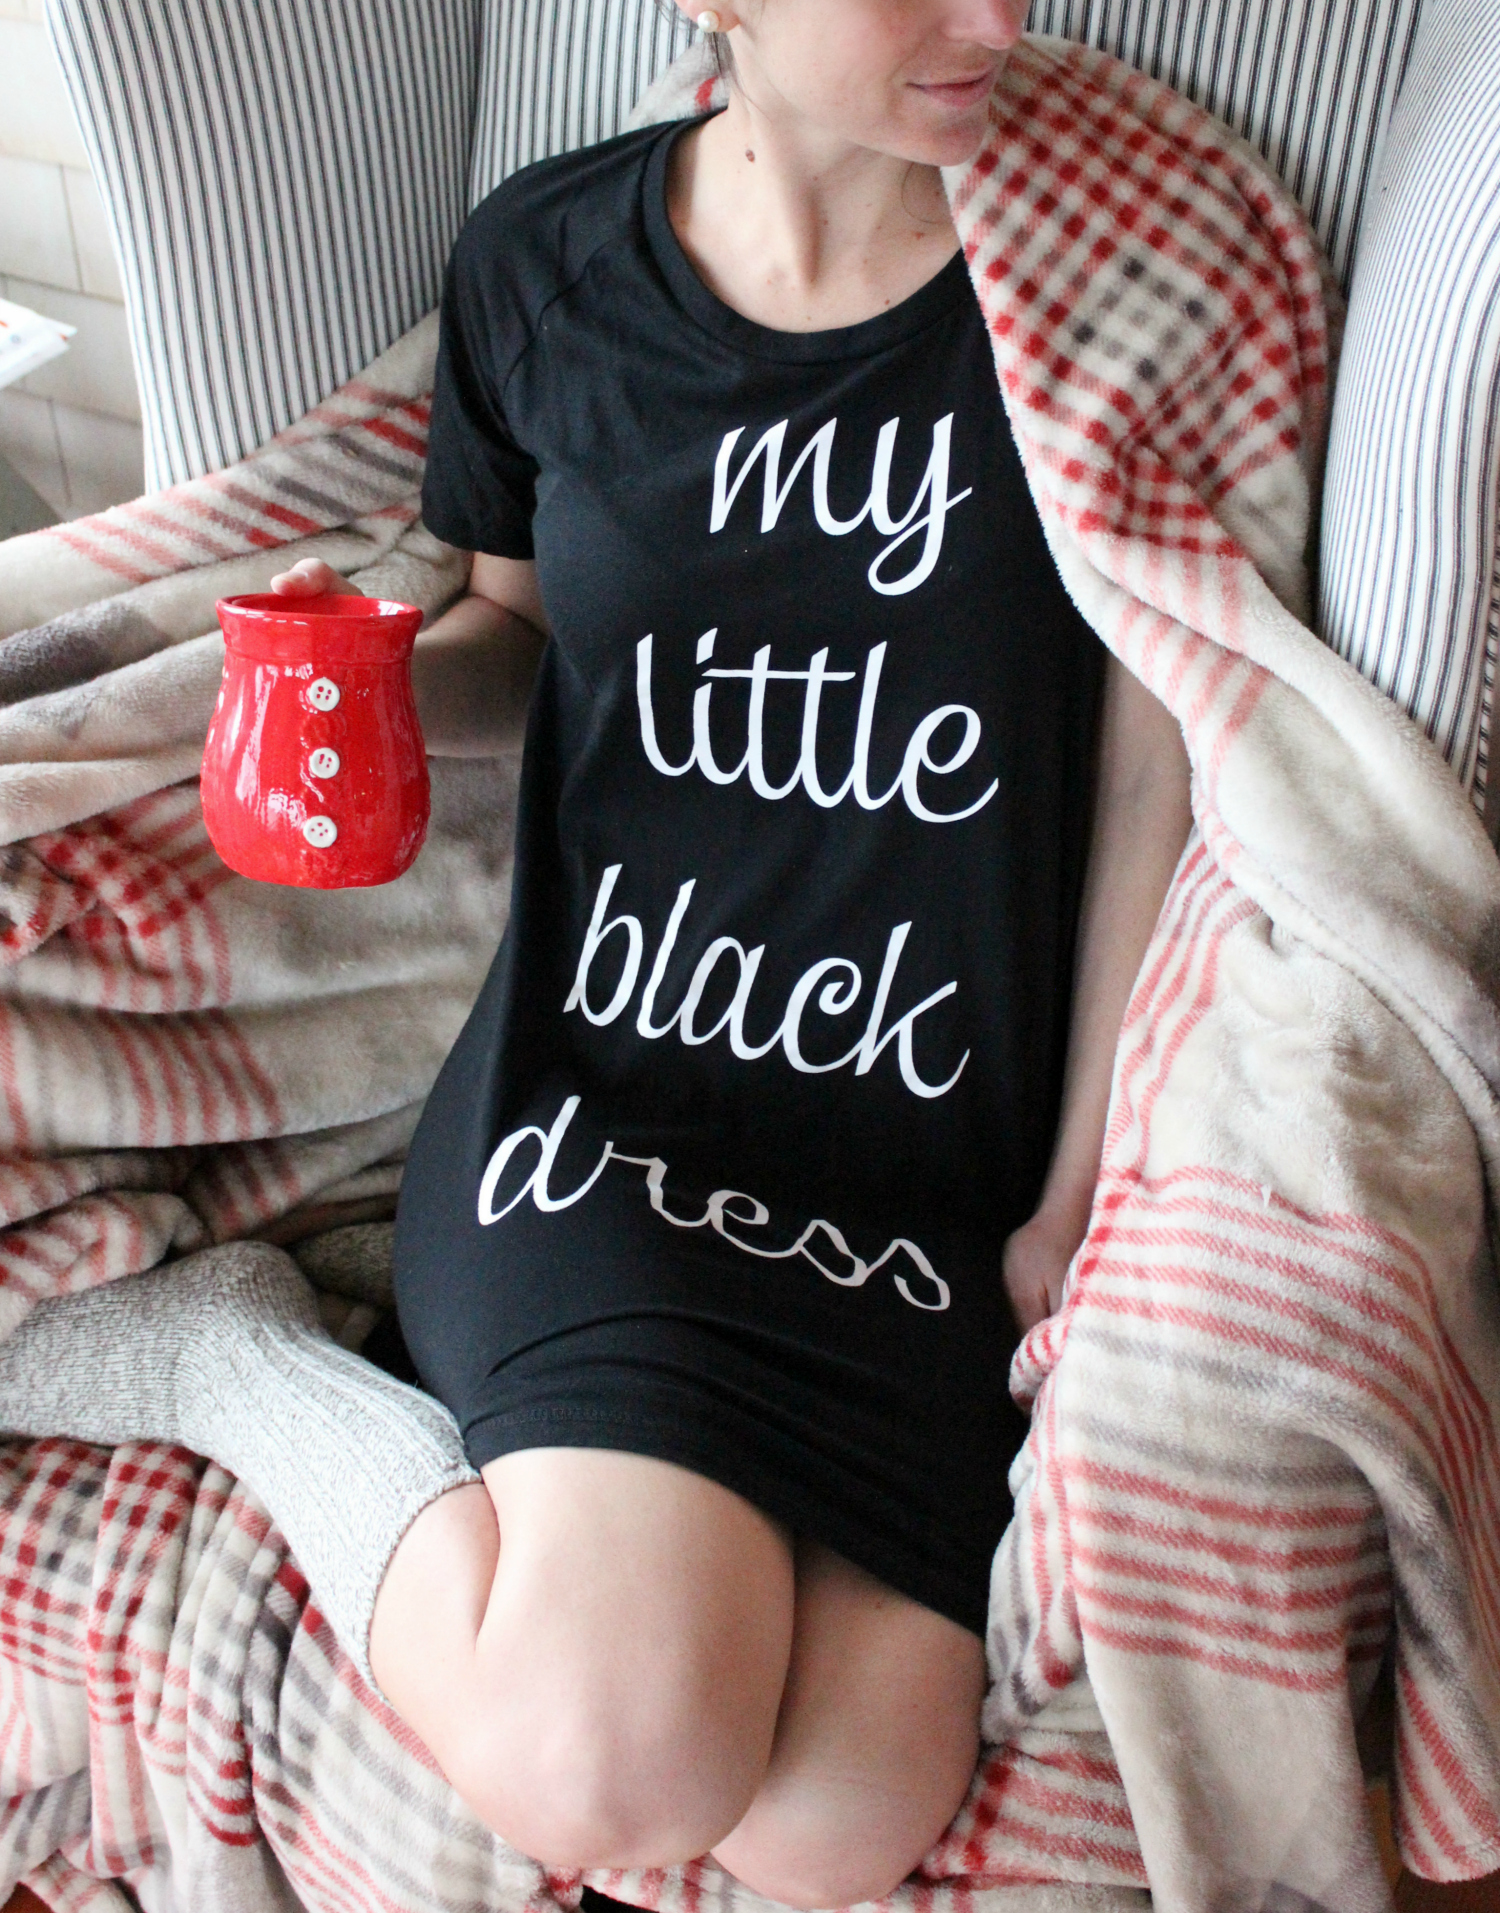 Adorable "my little black dress" night shirt from Joe Boxer